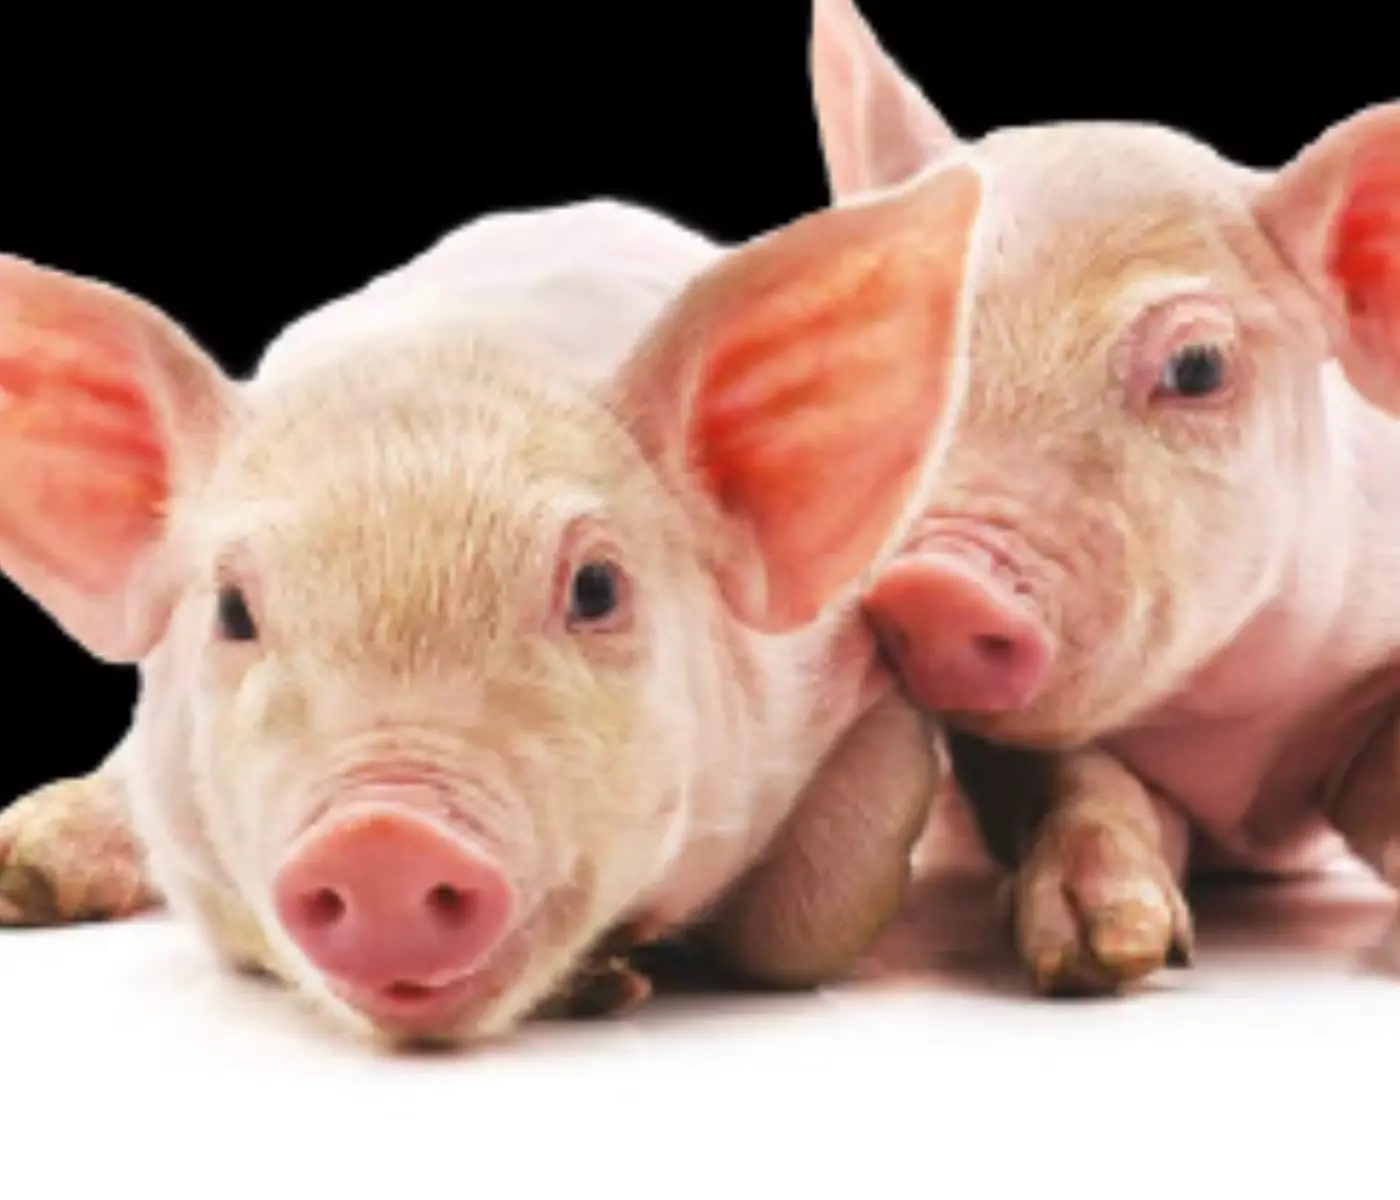 Vitamins for Swine Health, Welfare, and Productivity